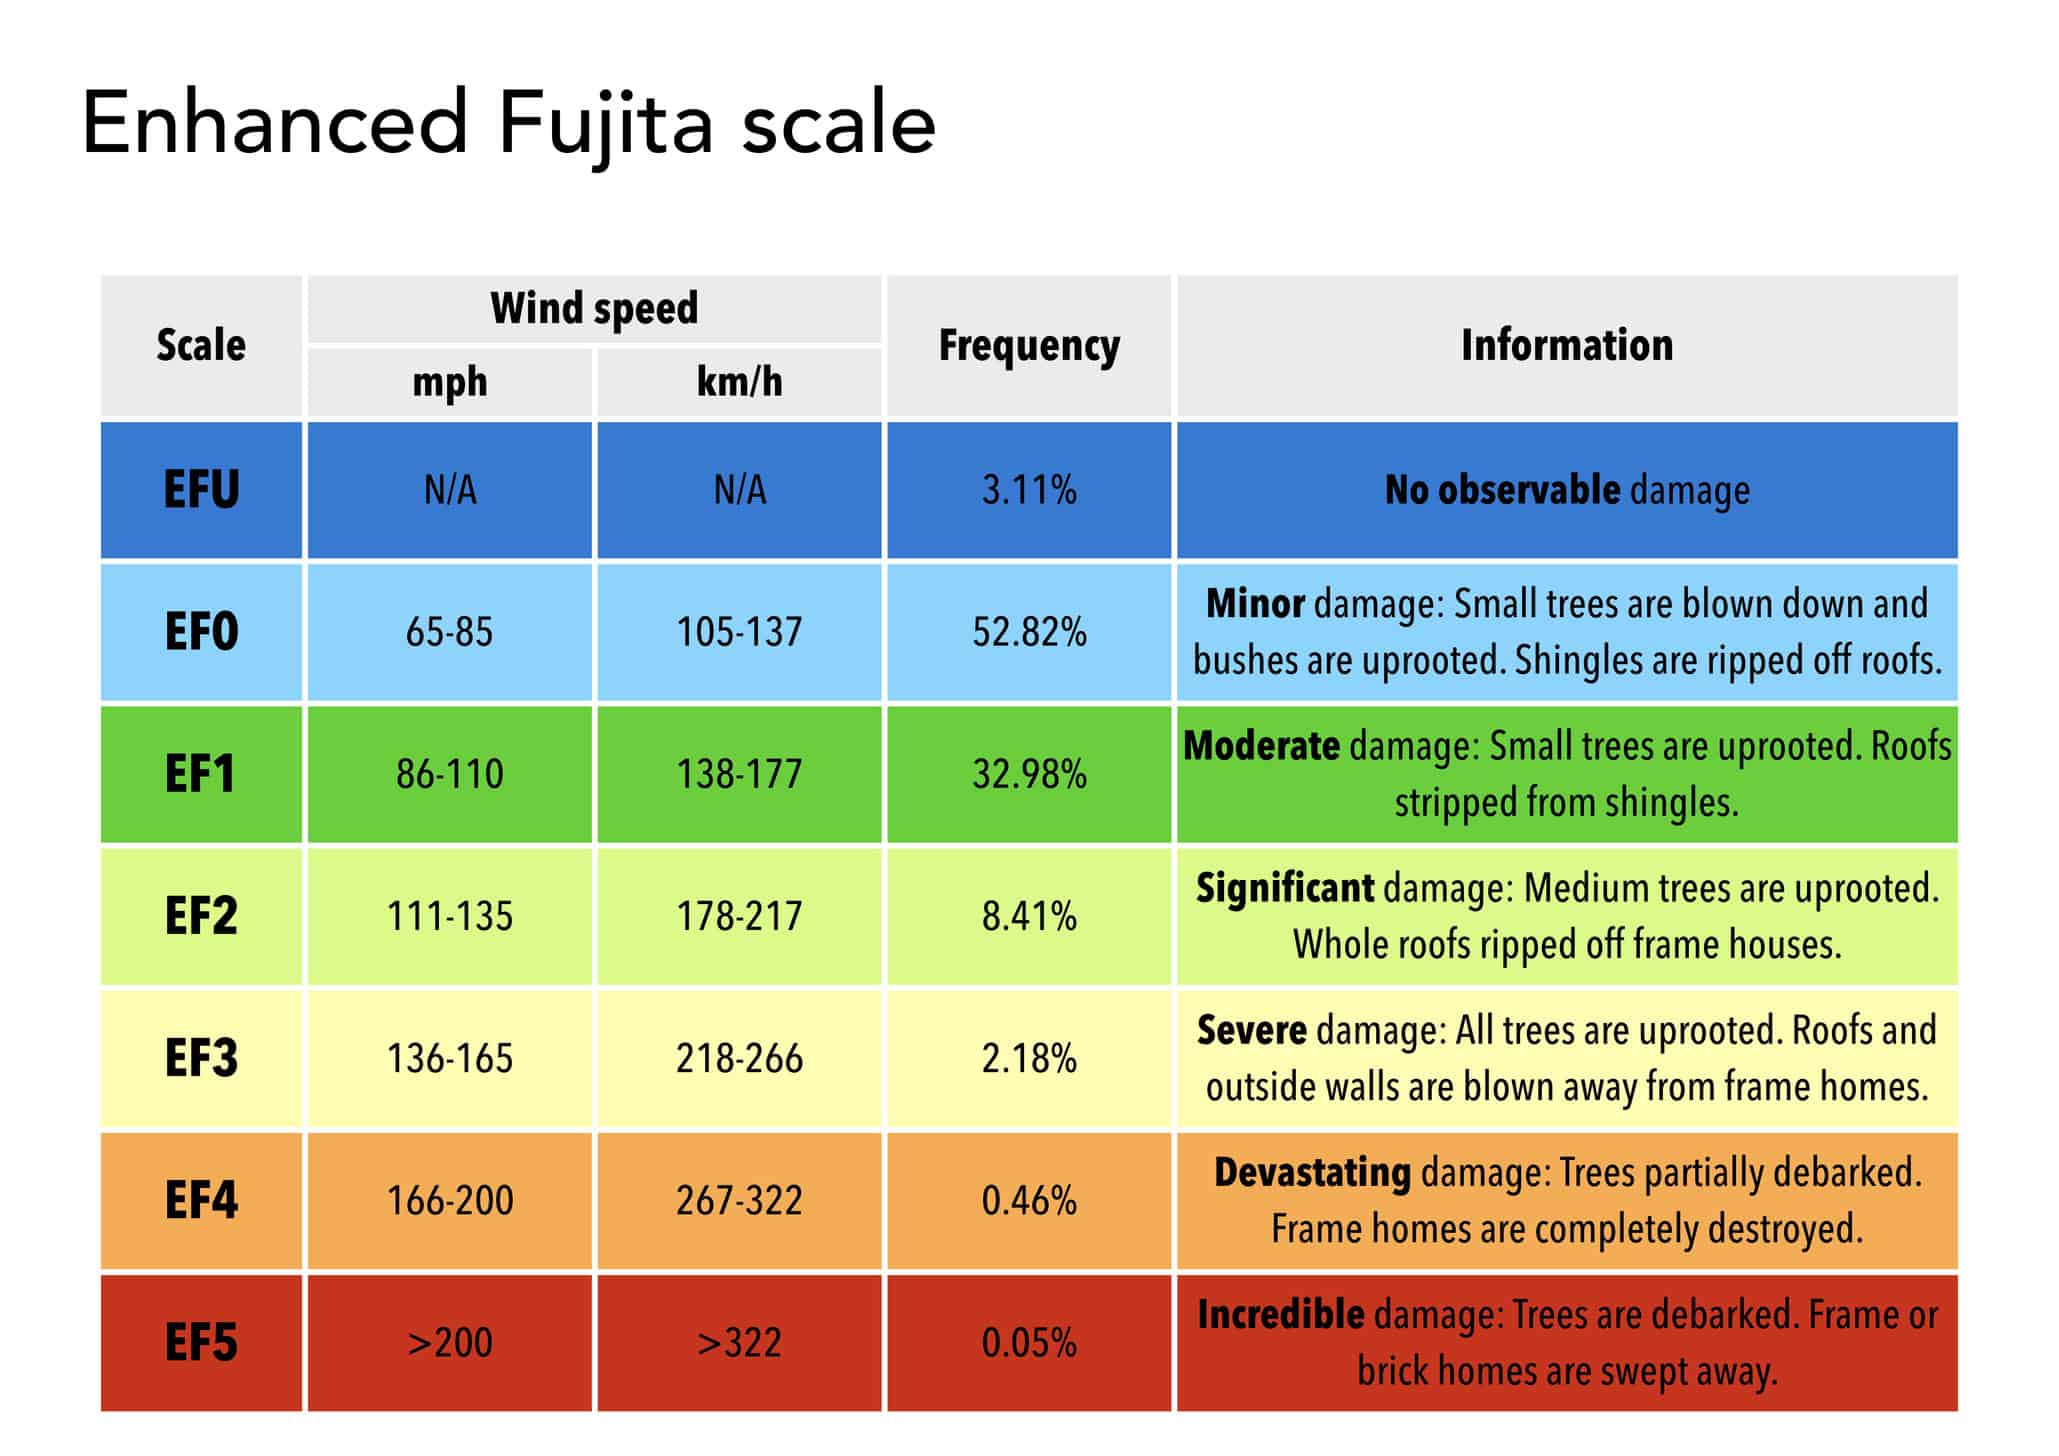 The Enhanced Fujita scale